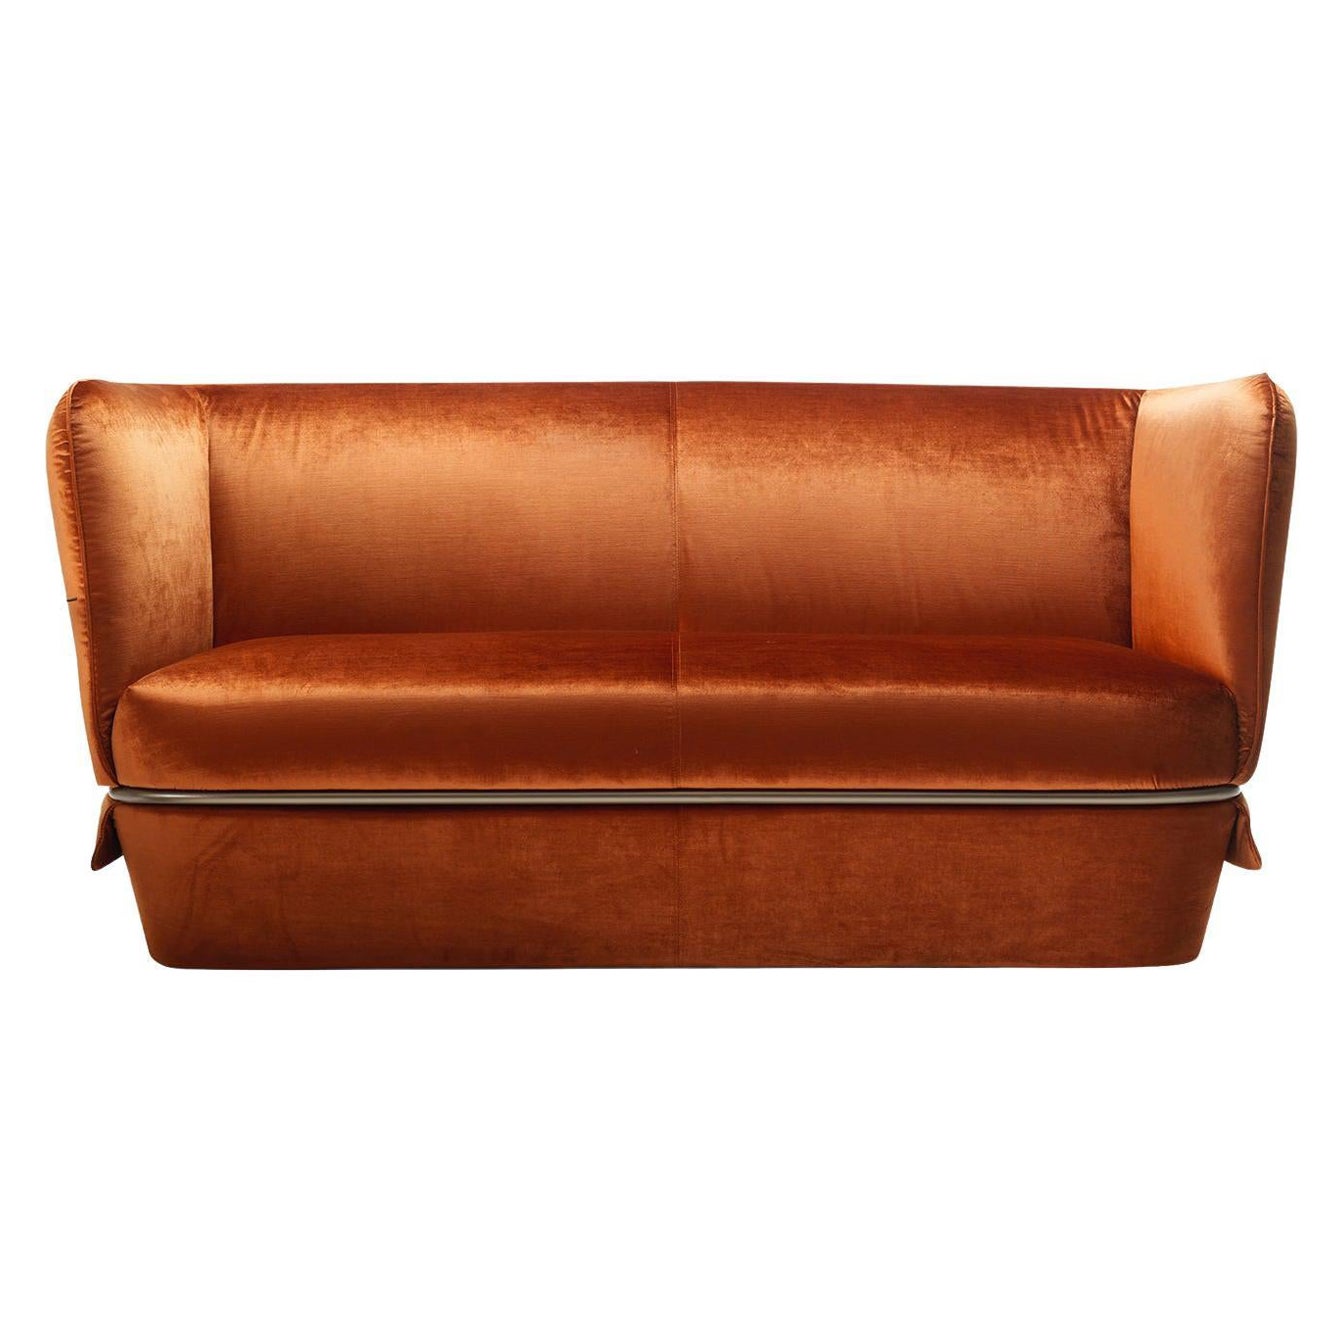 Chemise Orange Sofa by Studio LI_DO For Sale